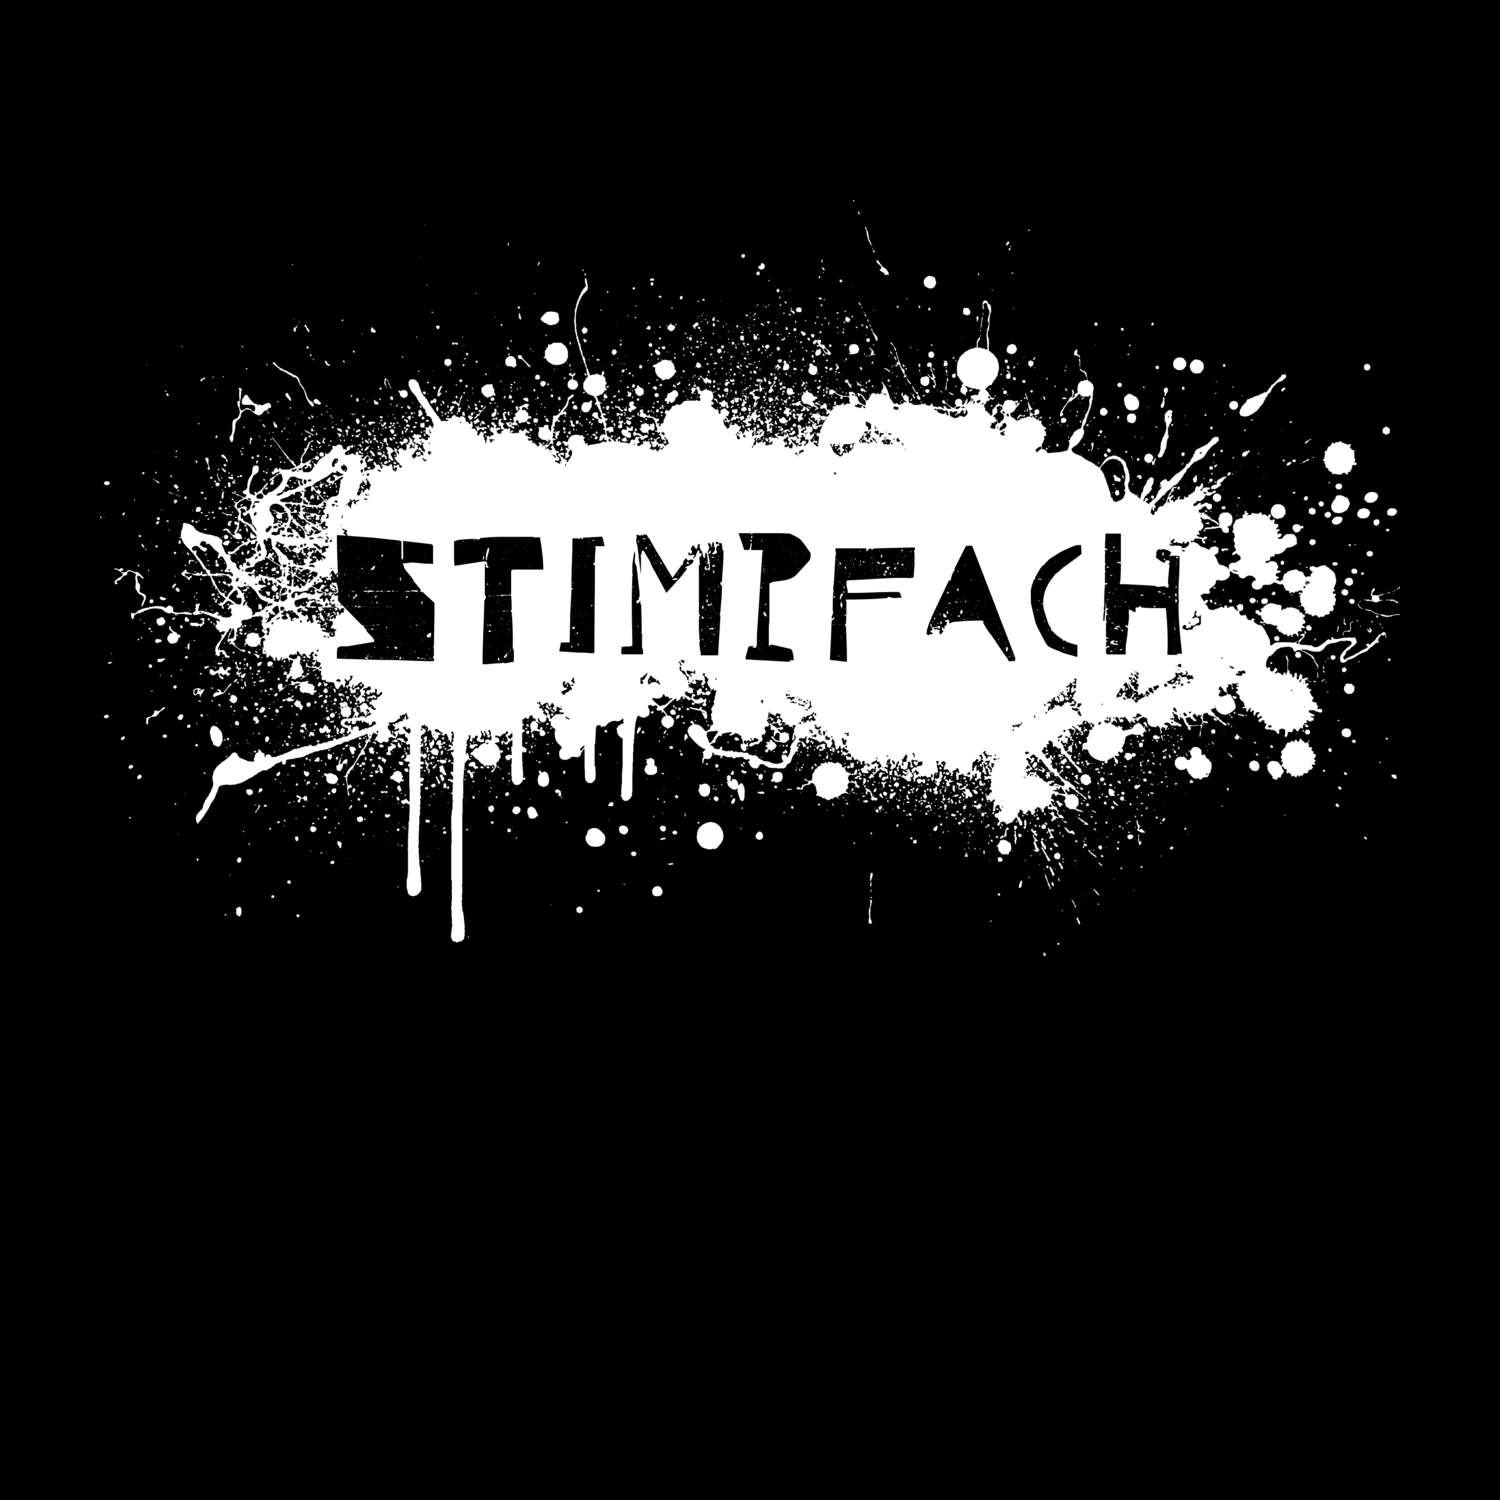 Stimpfach T-Shirt »Paint Splash Punk«